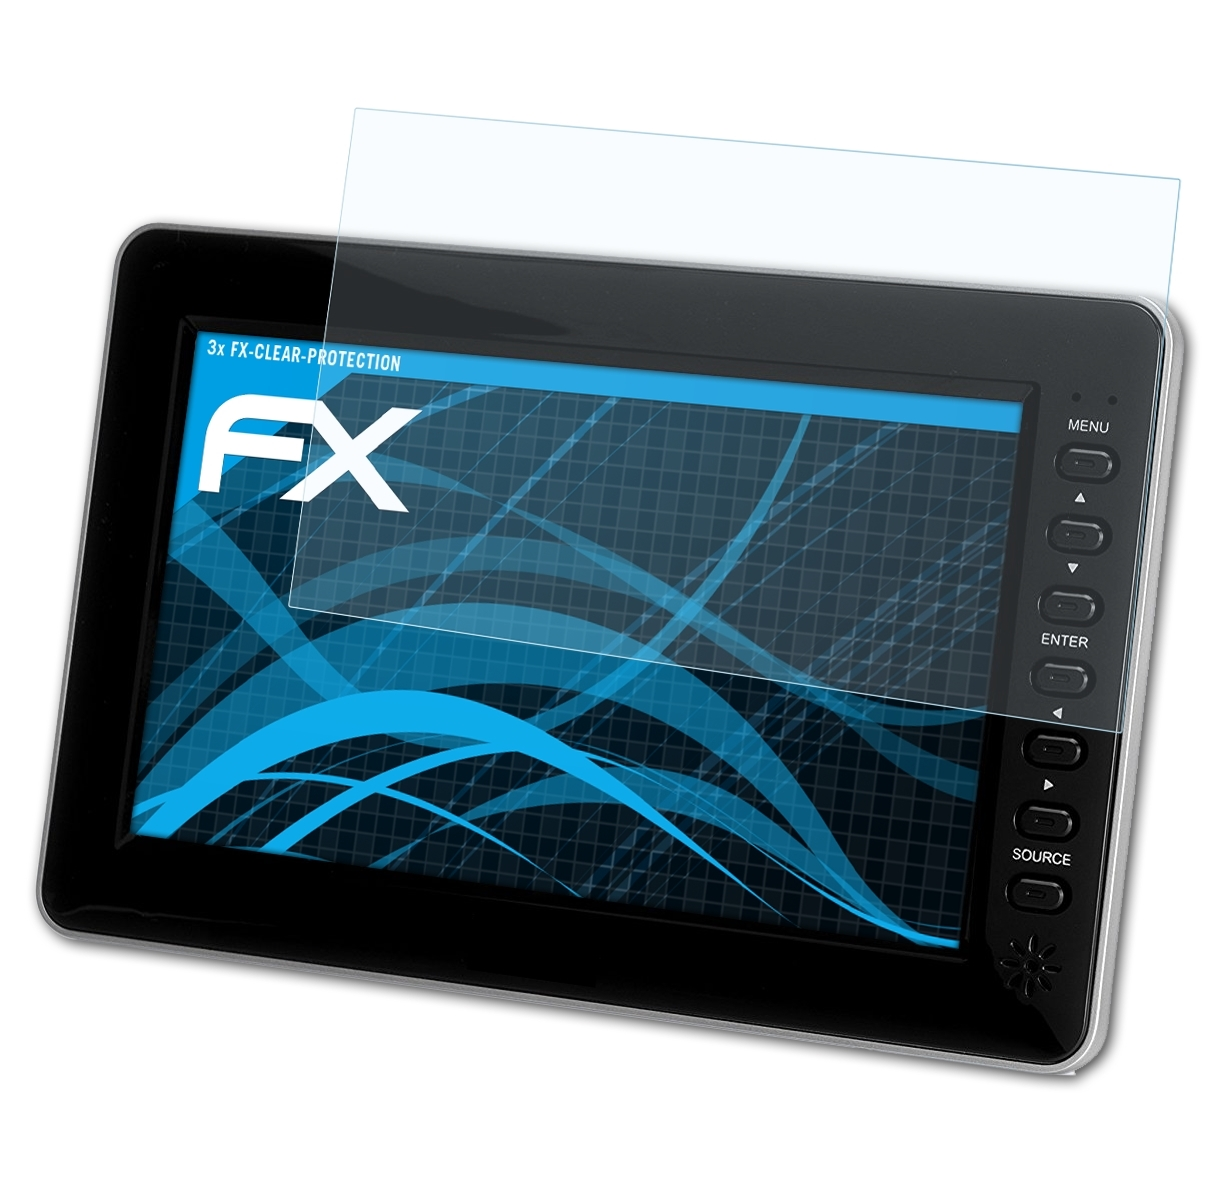 ATFOLIX Displayschutz(für Xoro 3x PTL FX-Clear 1010)